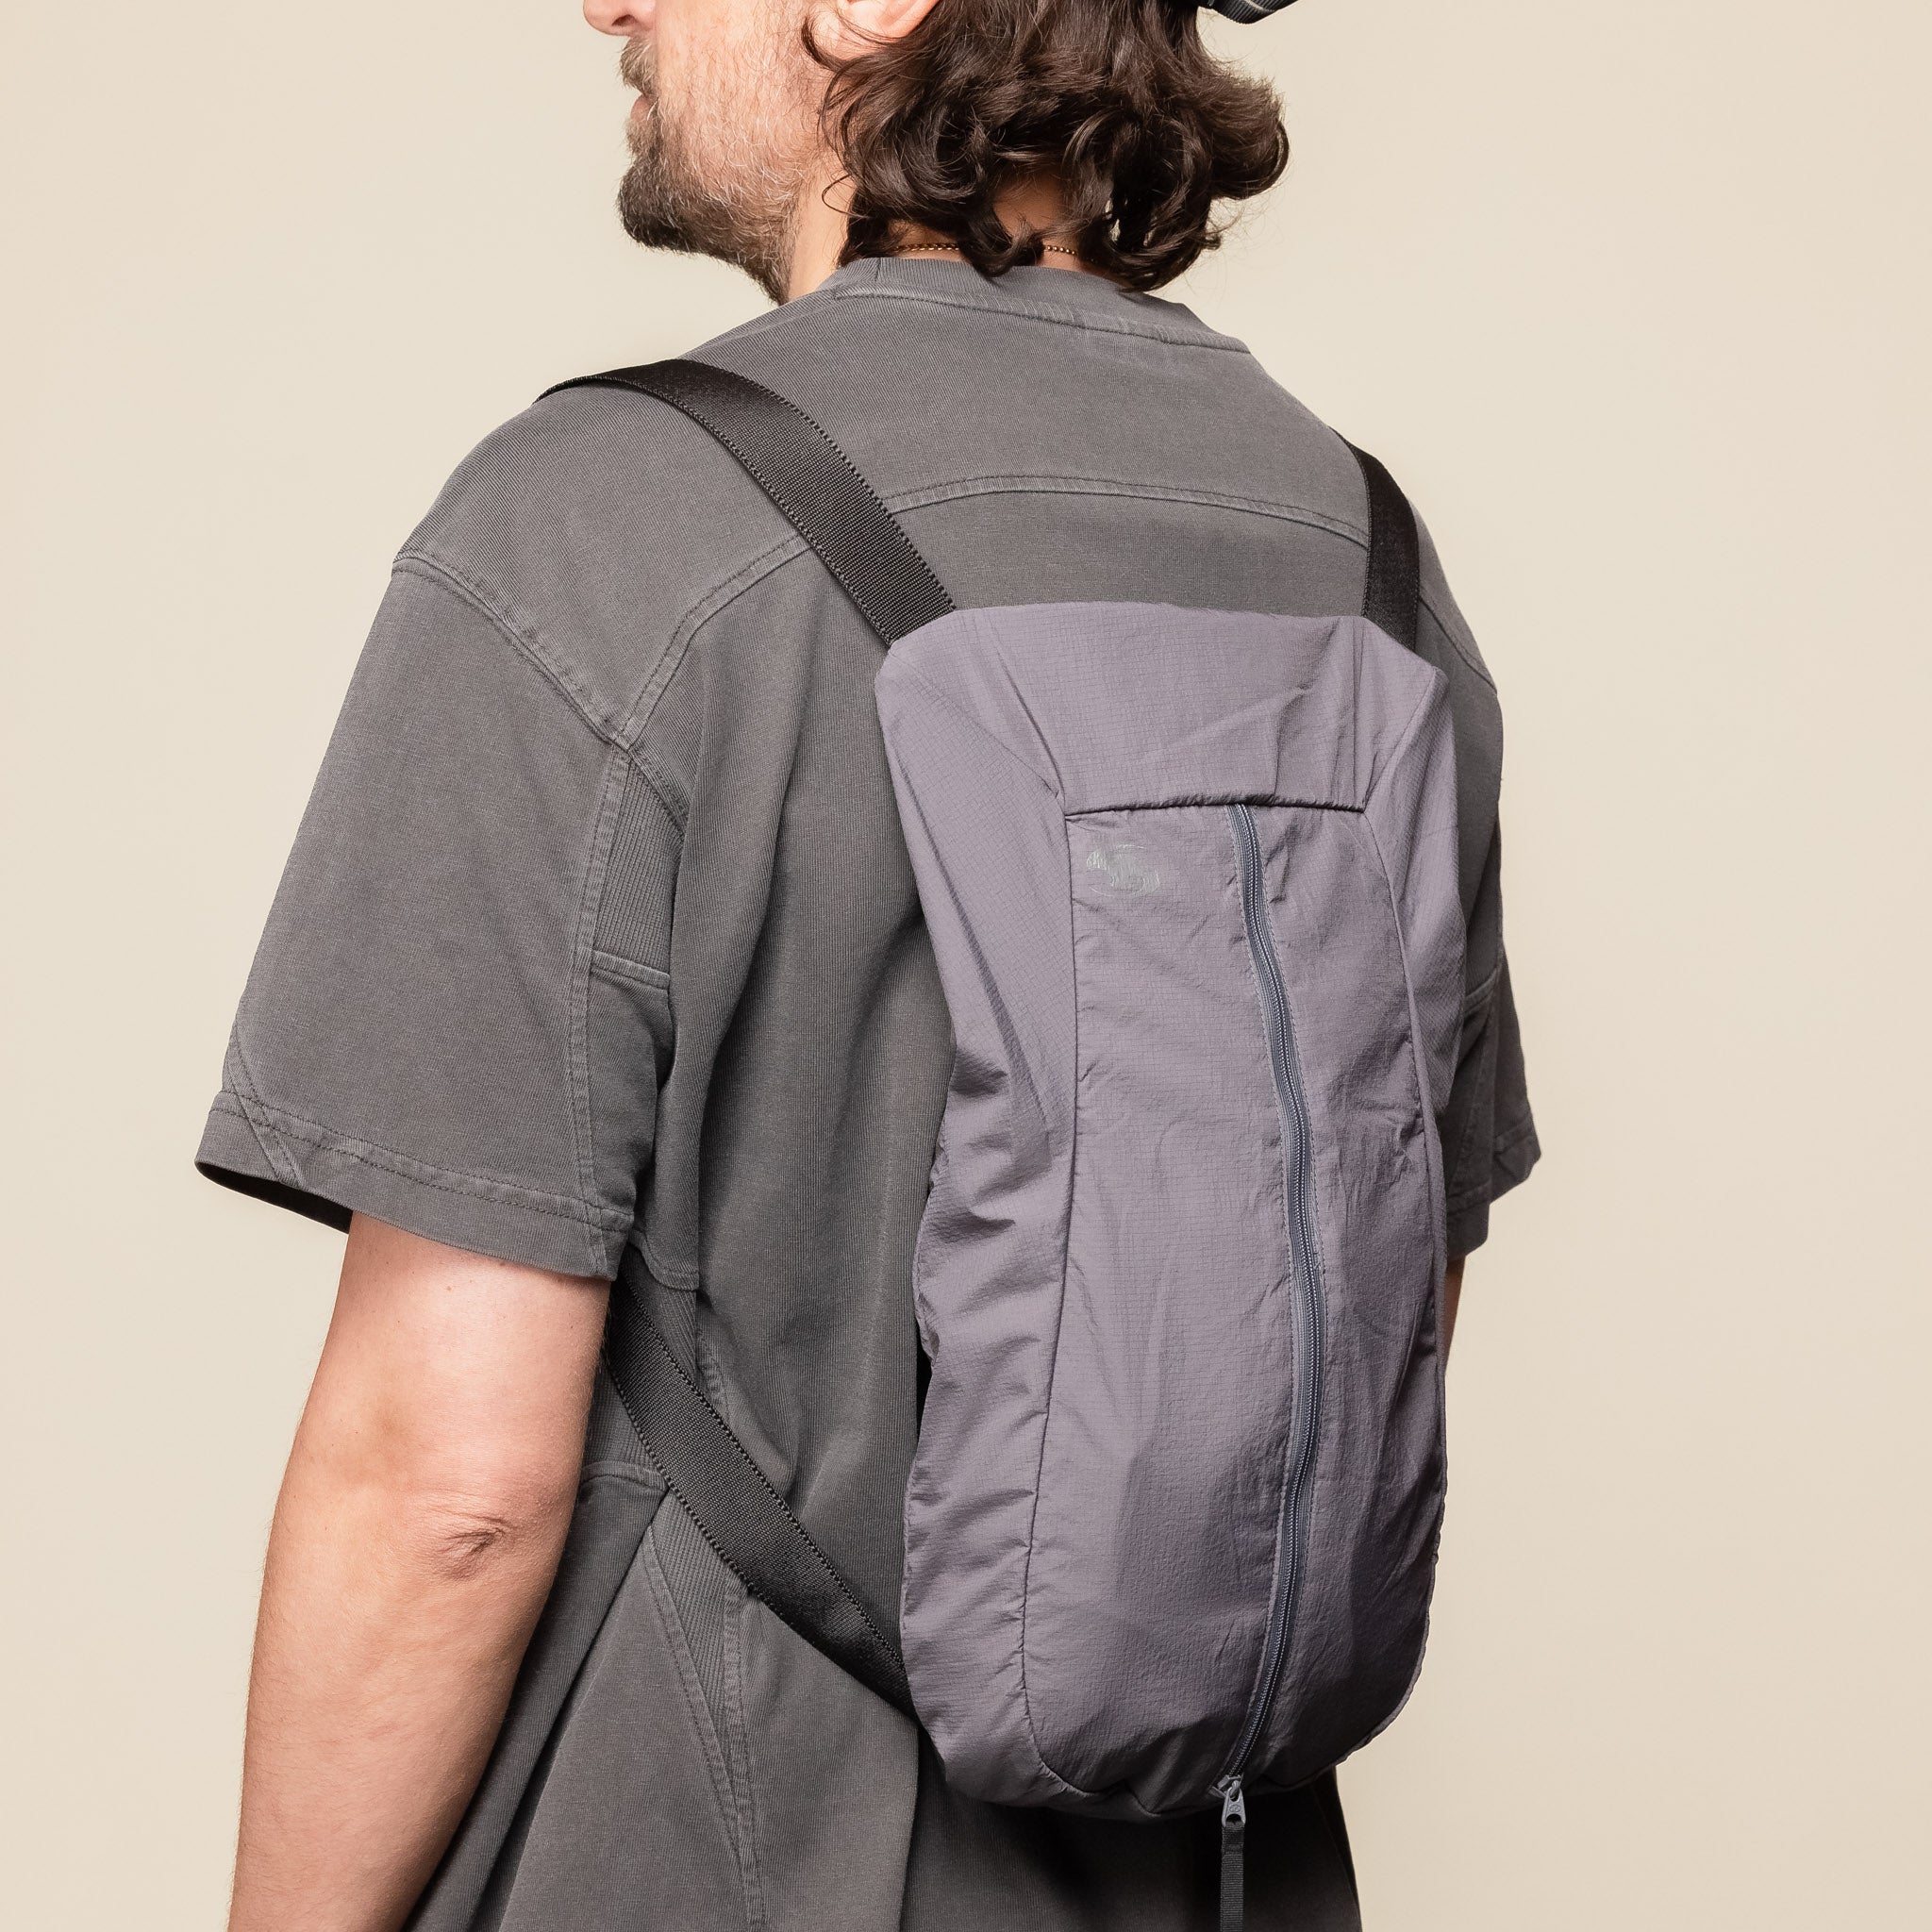 VNGROCOMTHA San San Gear - Backpack Jacket - Grey